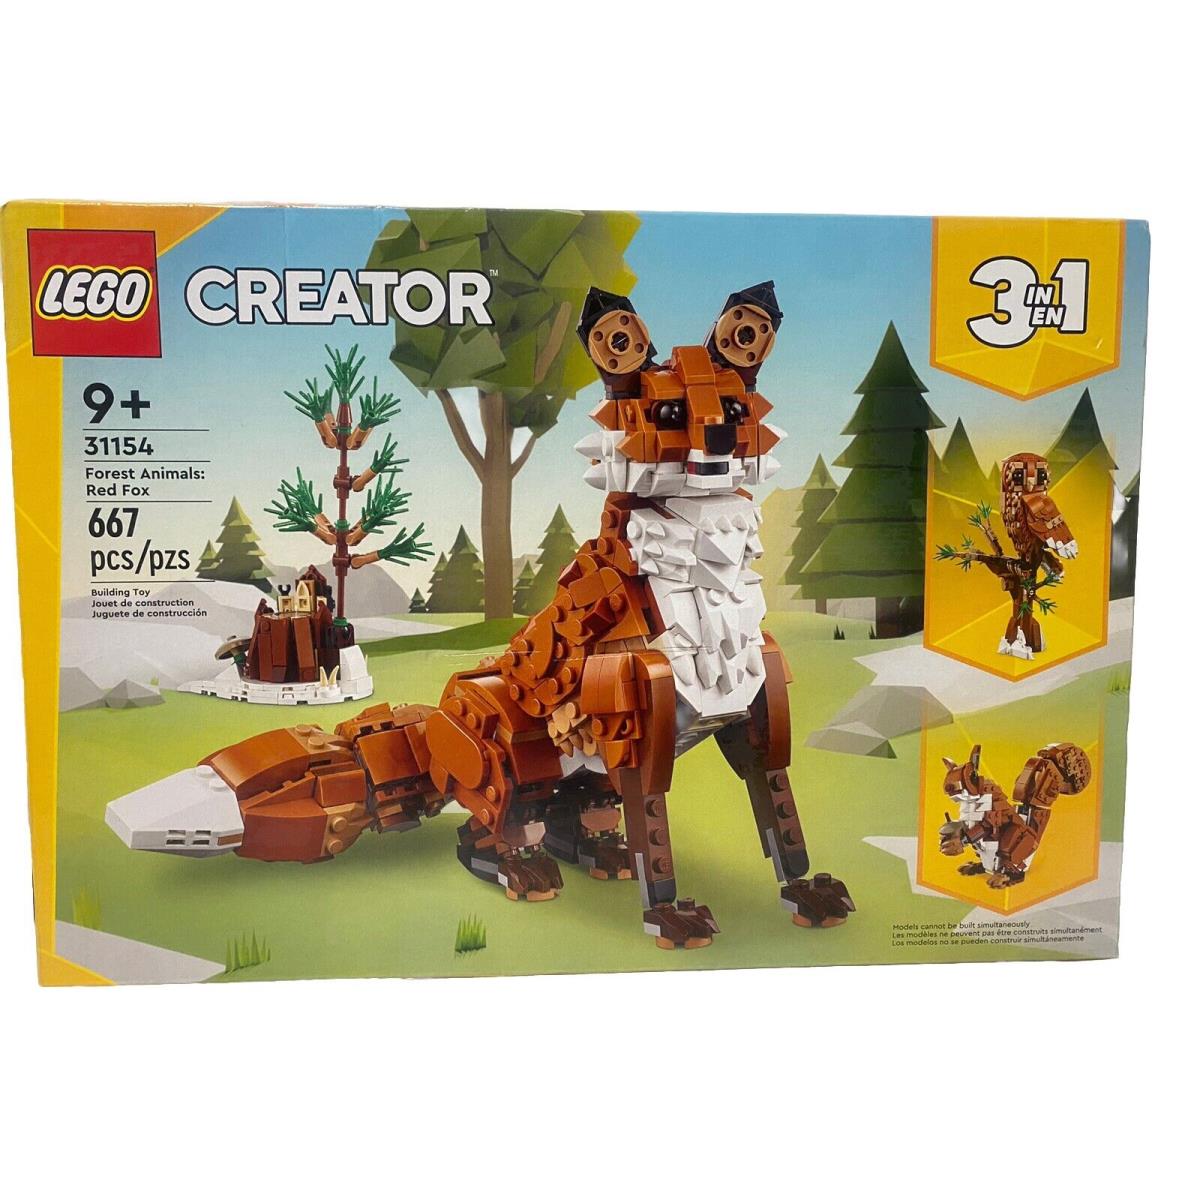 Lego Creator 3 in 1 31154 Forest Animals: Red Fox Fox Owl Squirrel